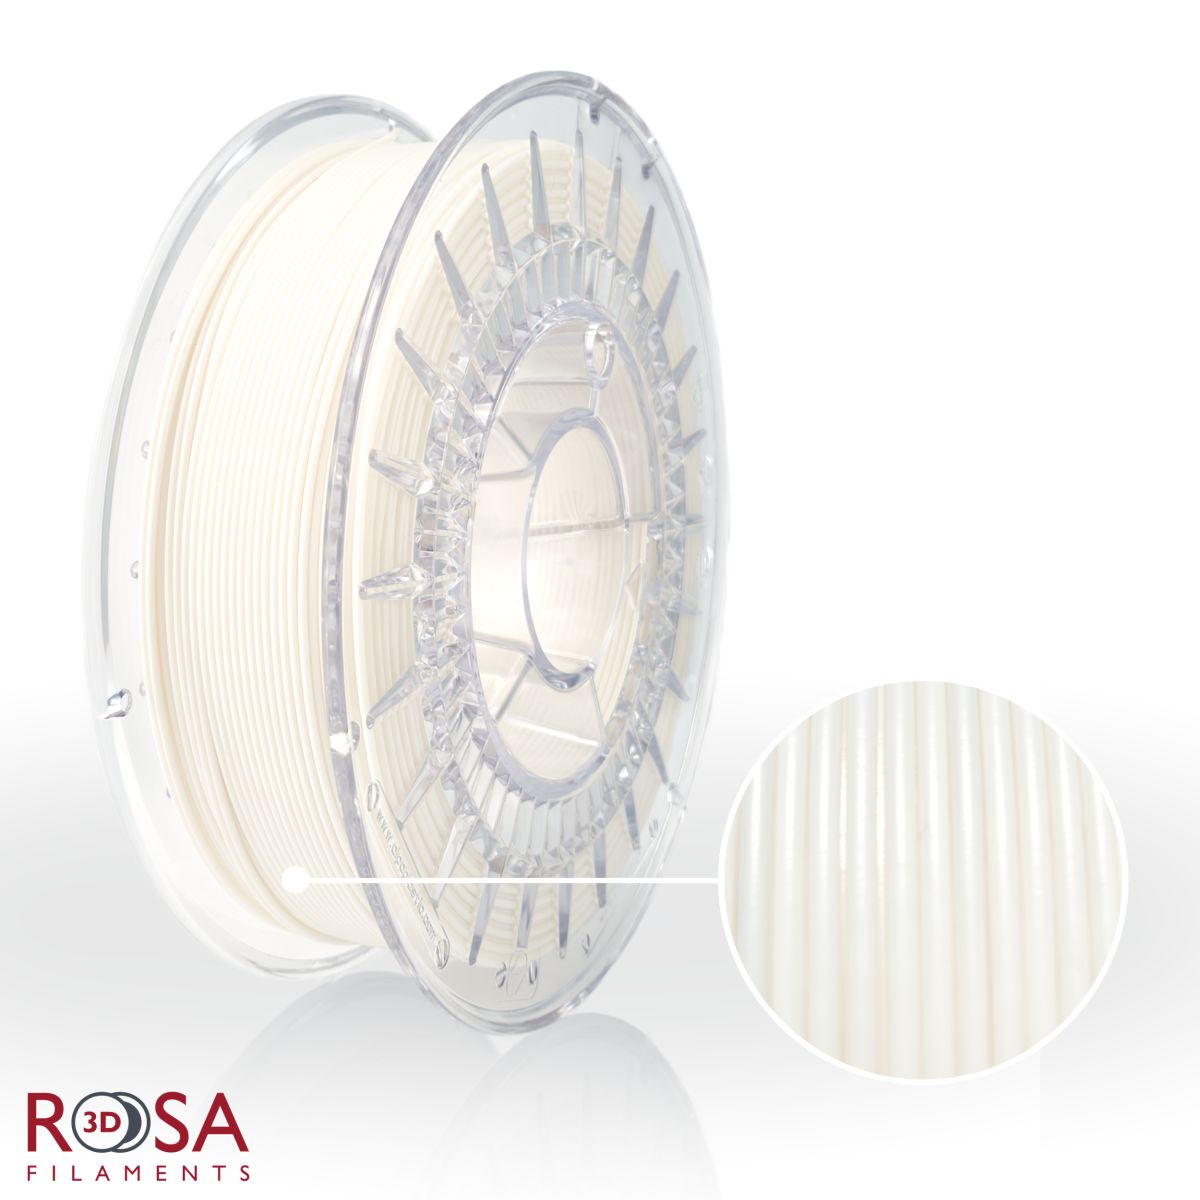 szpula filamentu ABS V0 FR o wadze 0,7 kg produkcji ROSA3D